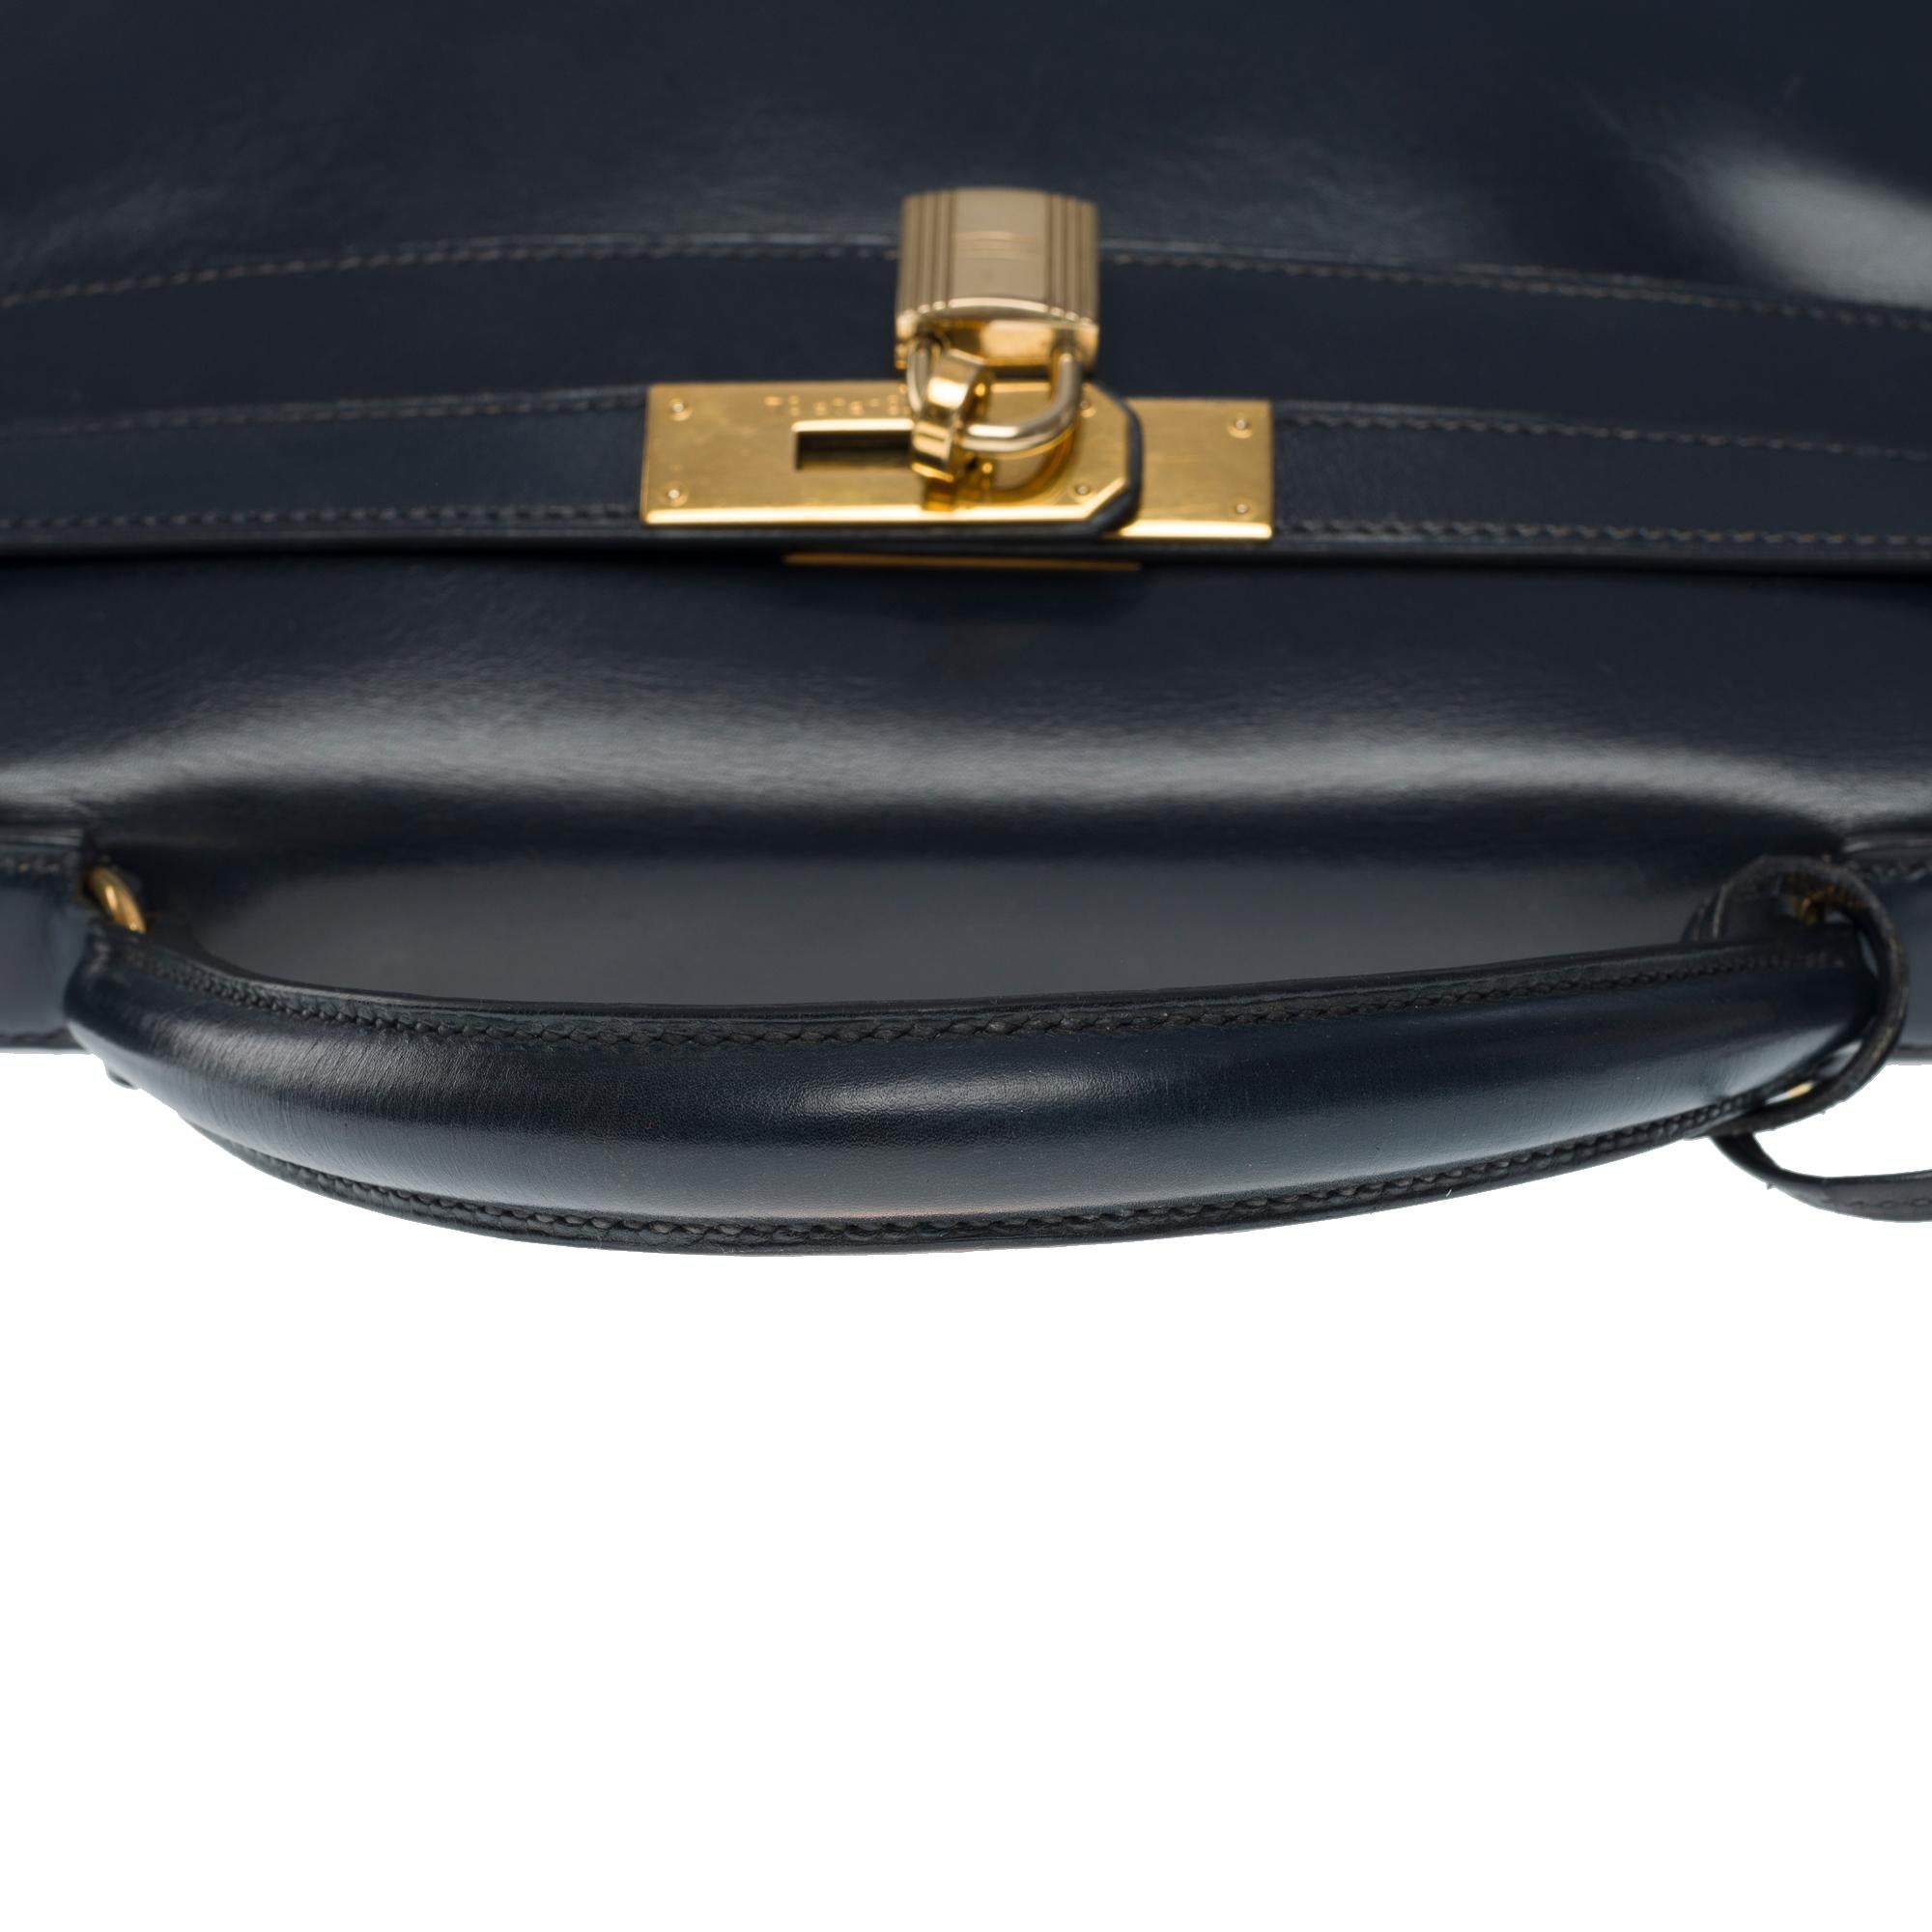 Hermès Kelly 32 retourne handbag strap in Navy Blue box calfskin leather, GHW 5